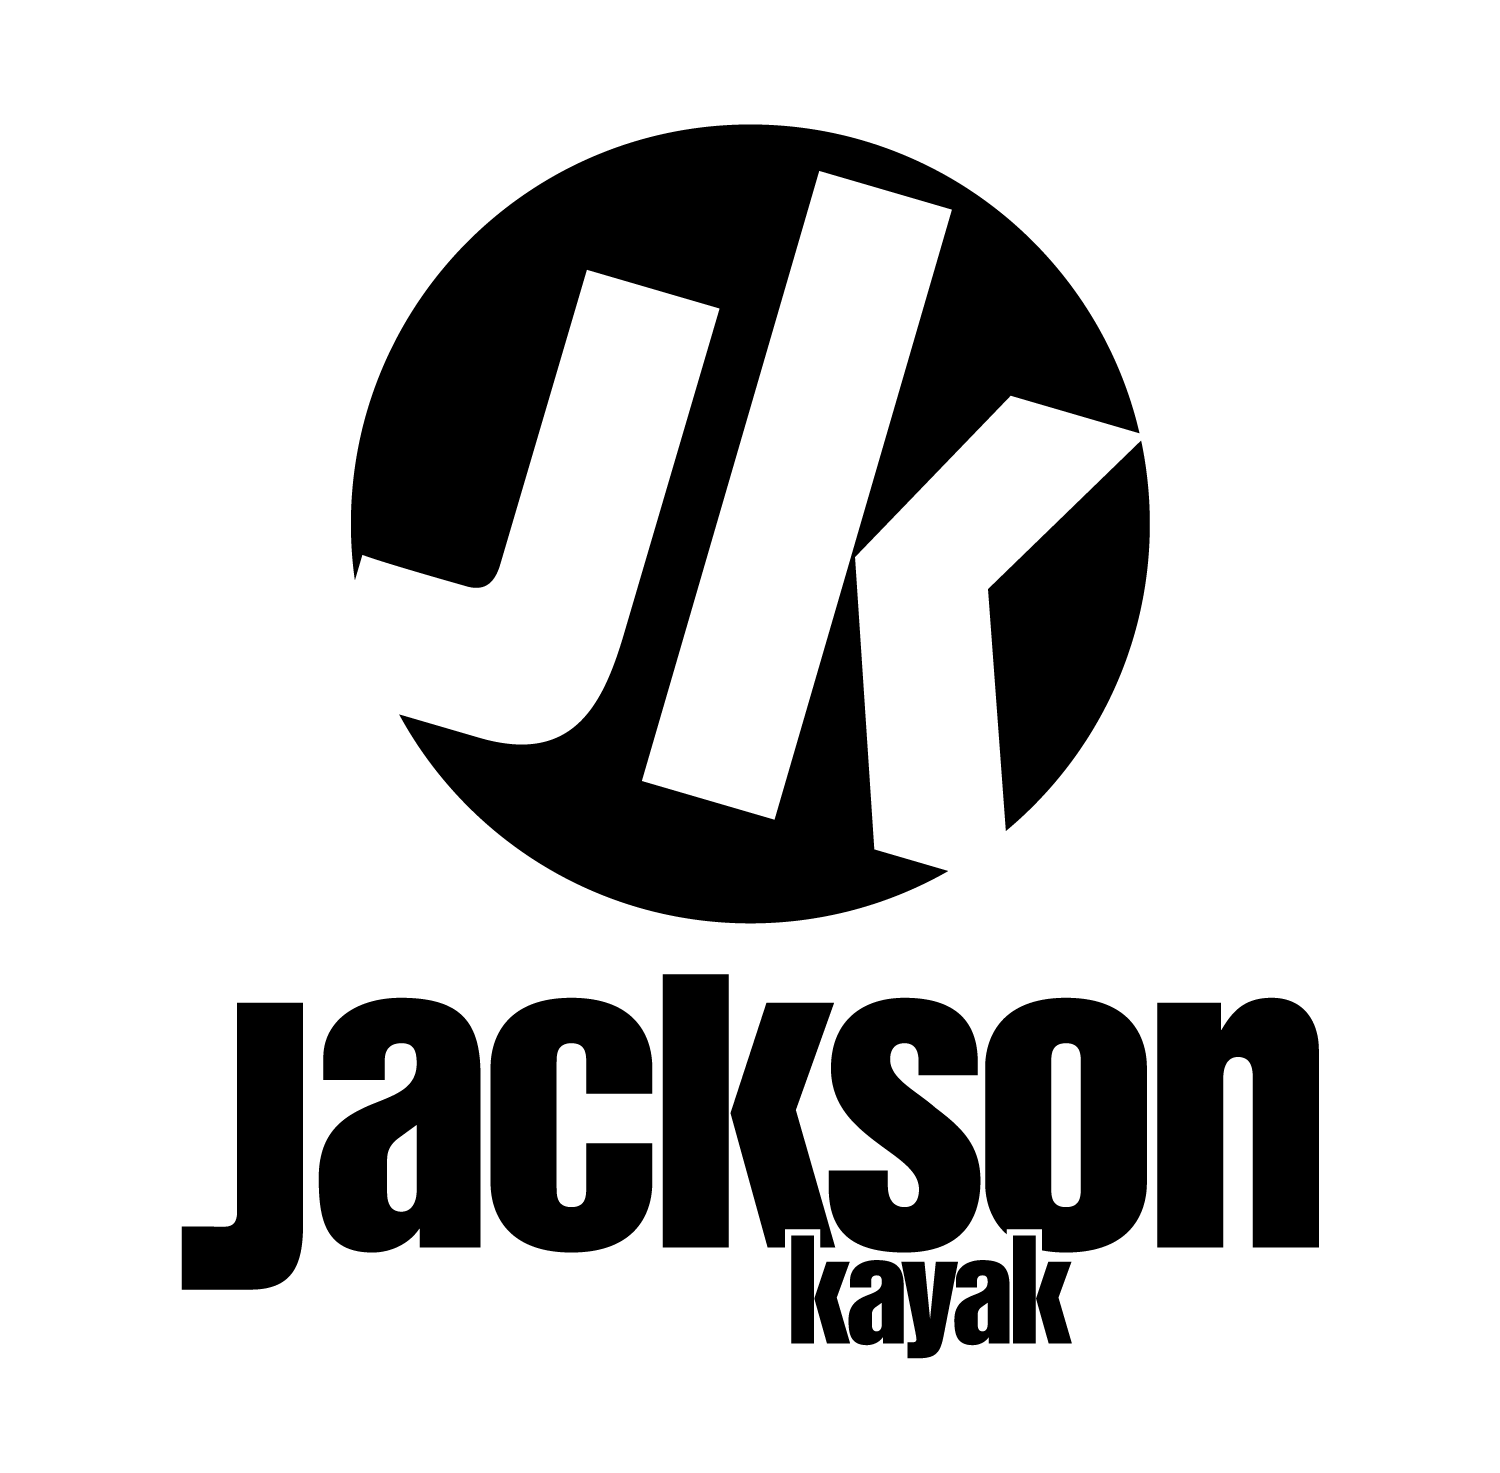 Kayak.com Logo - Logos - Jackson Kayak